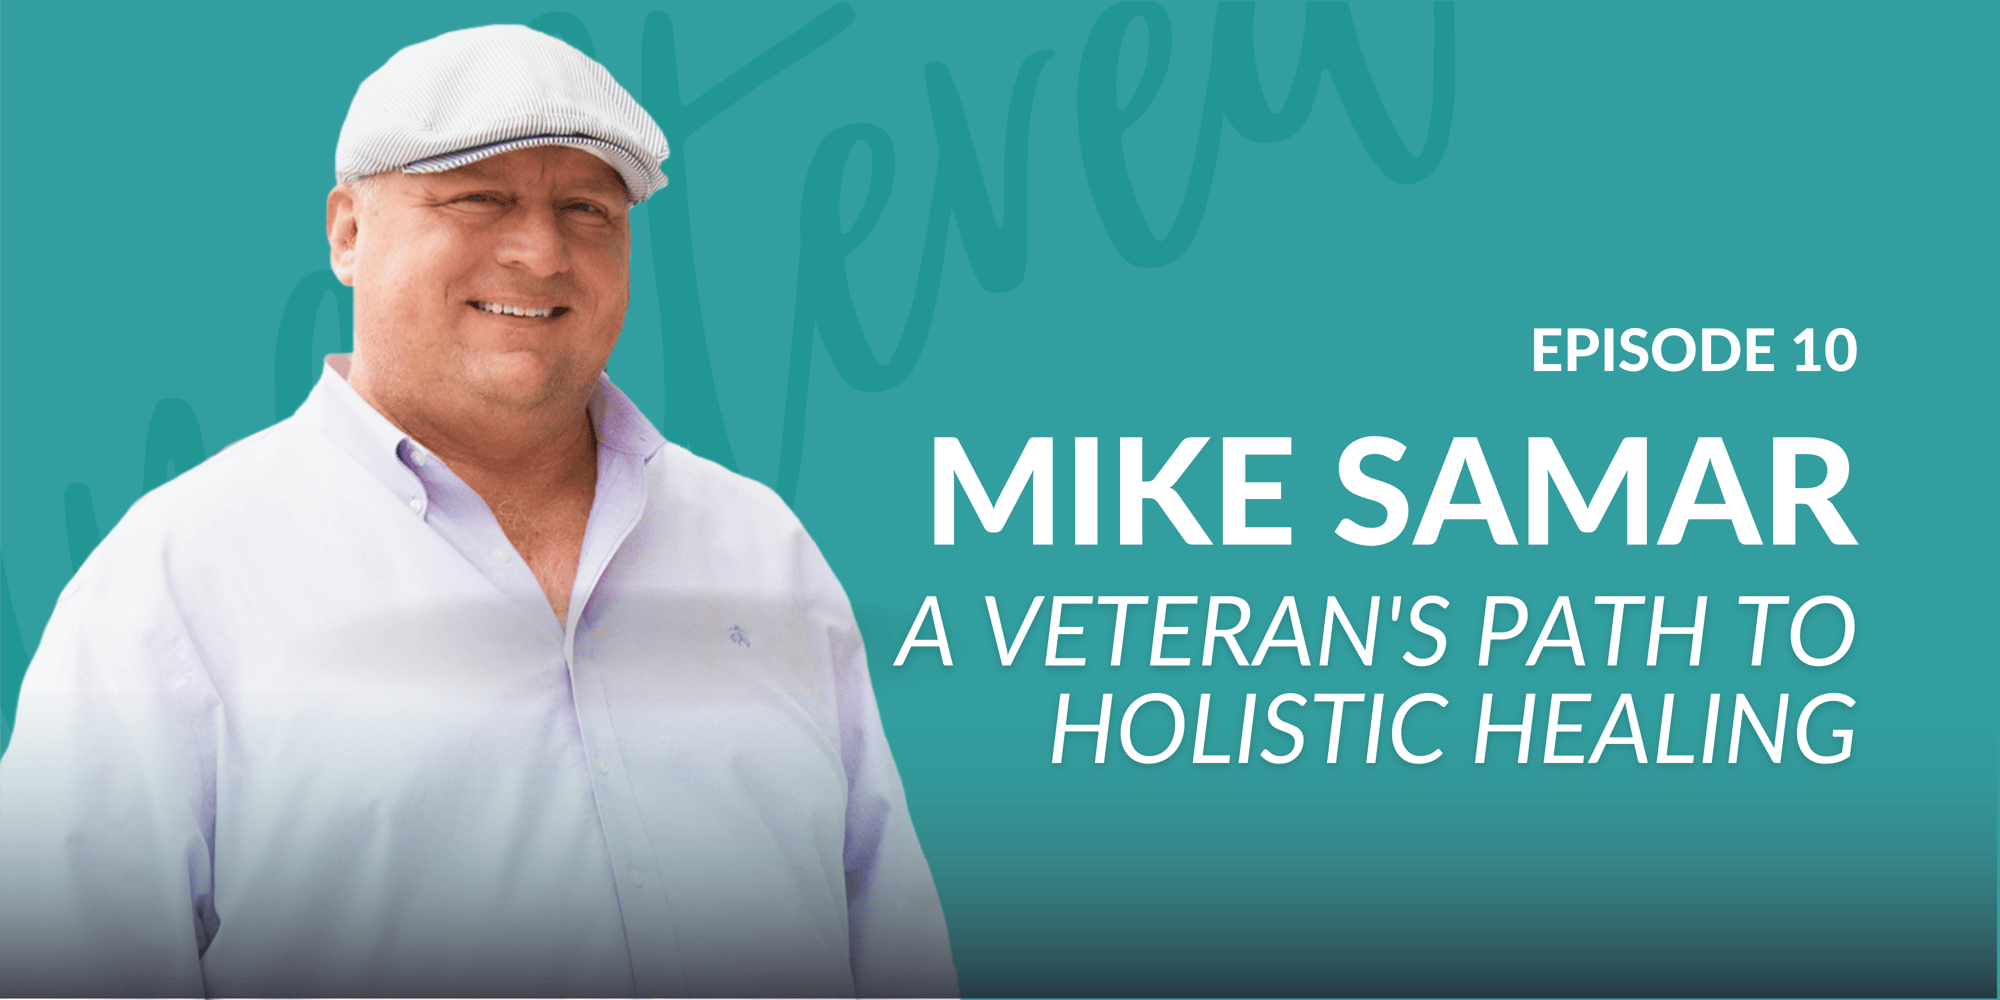 A Veteran's Path to Holistic Healing